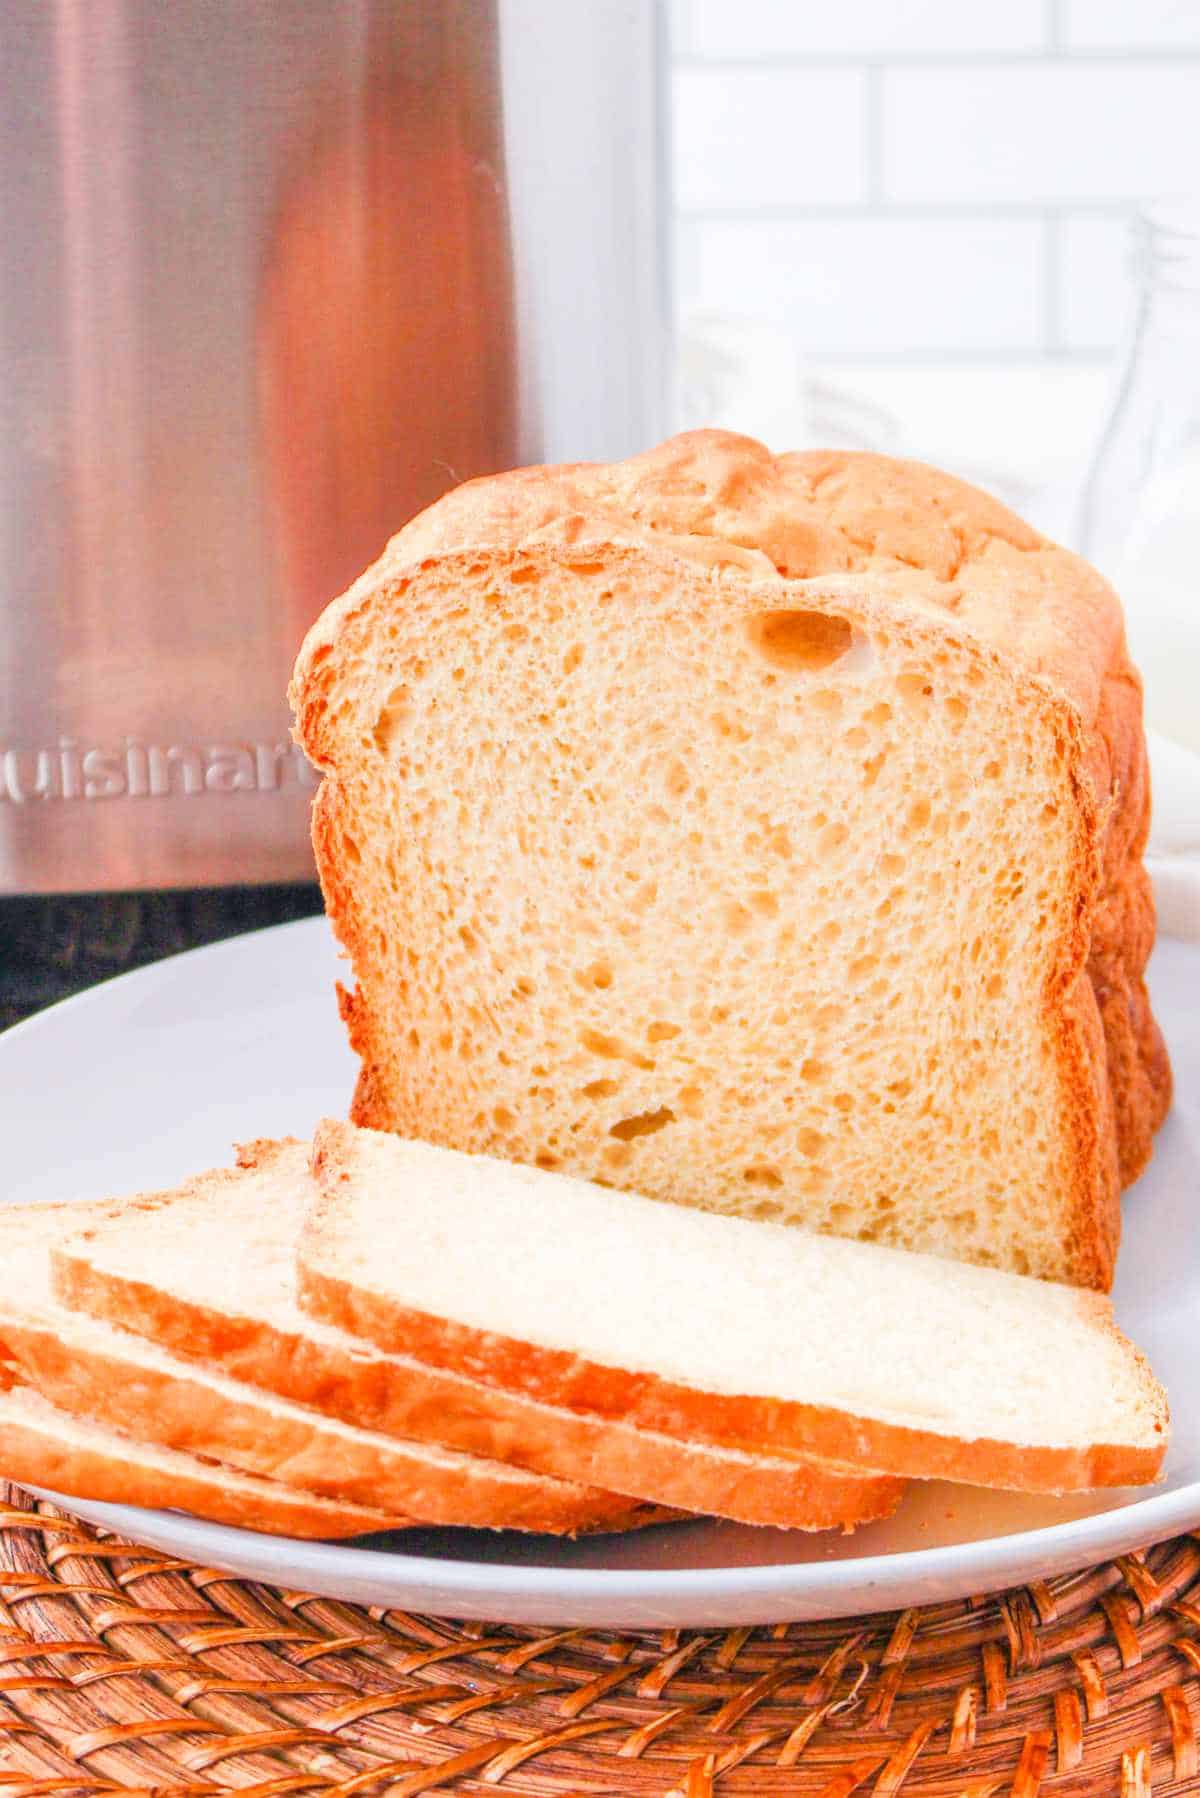 Sliced bread machine sandwich bread on a plate.